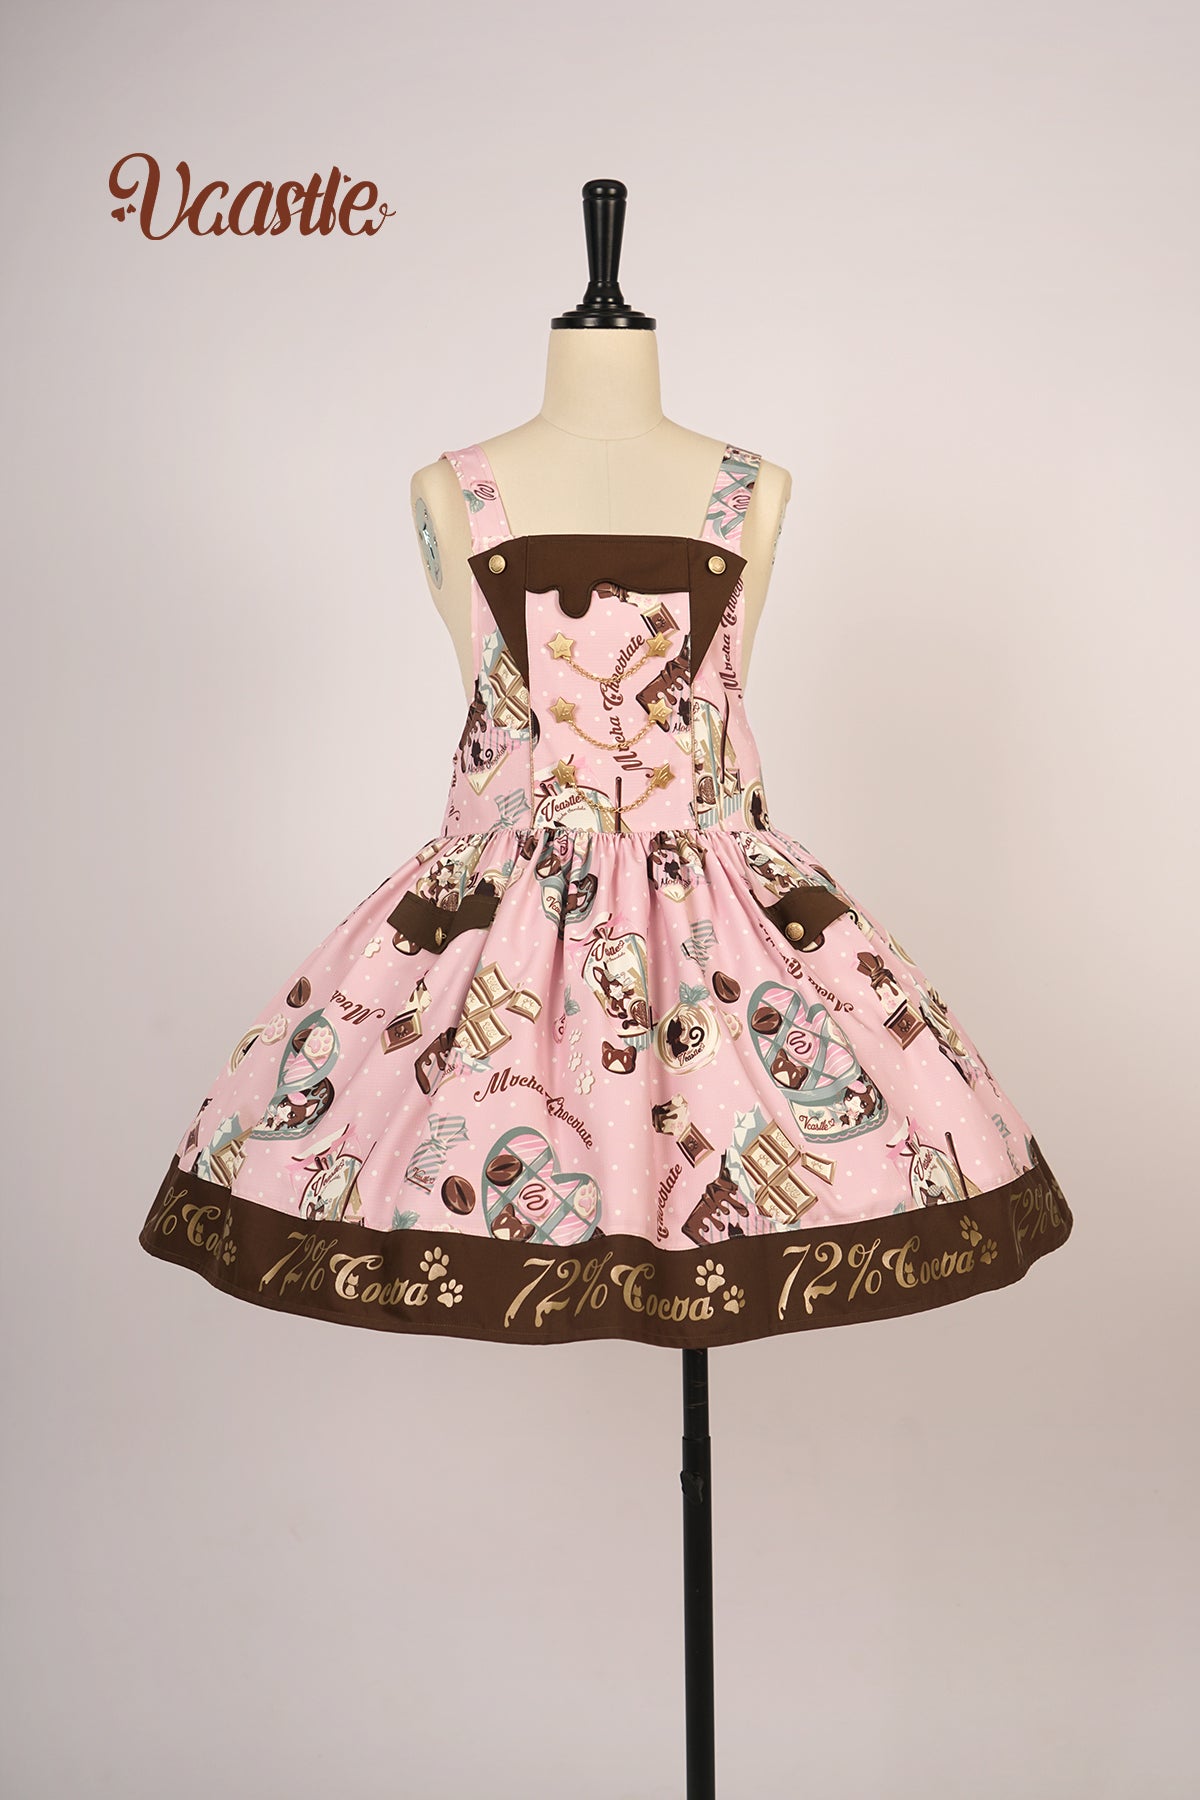 Vcastle~Mocha Choc~Kawaii Lolita OP Dress Multicolors S pink suspender skirt 